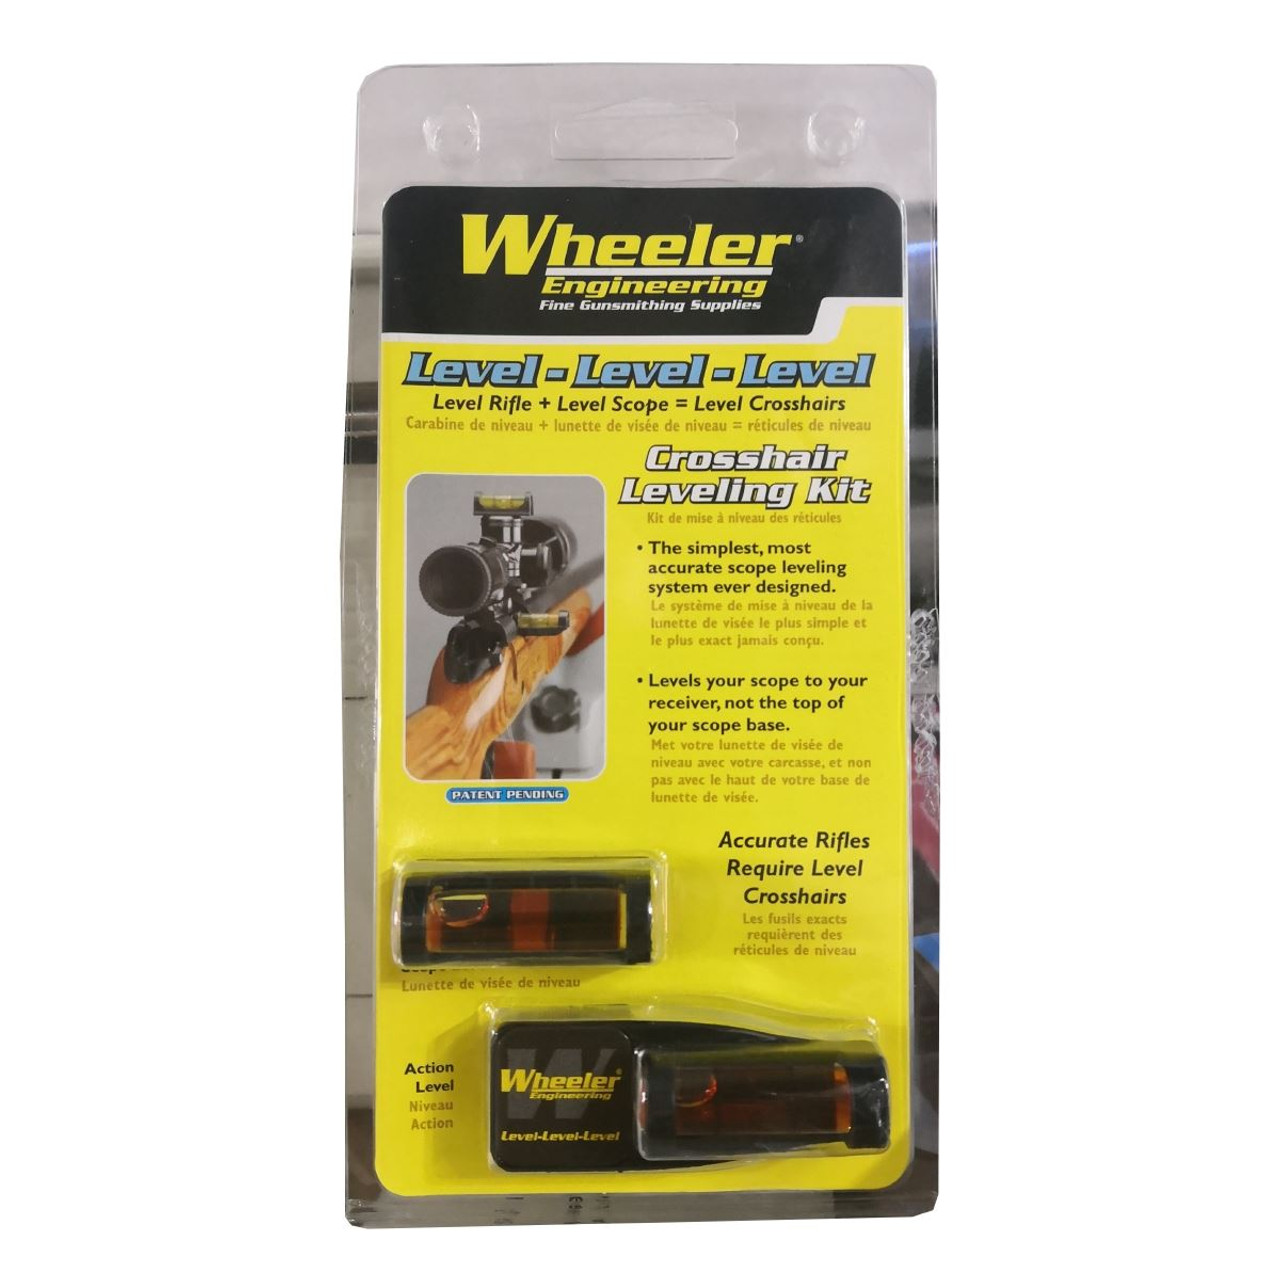 Wheeler Level-Level-Level Crosshair Levelling Kit